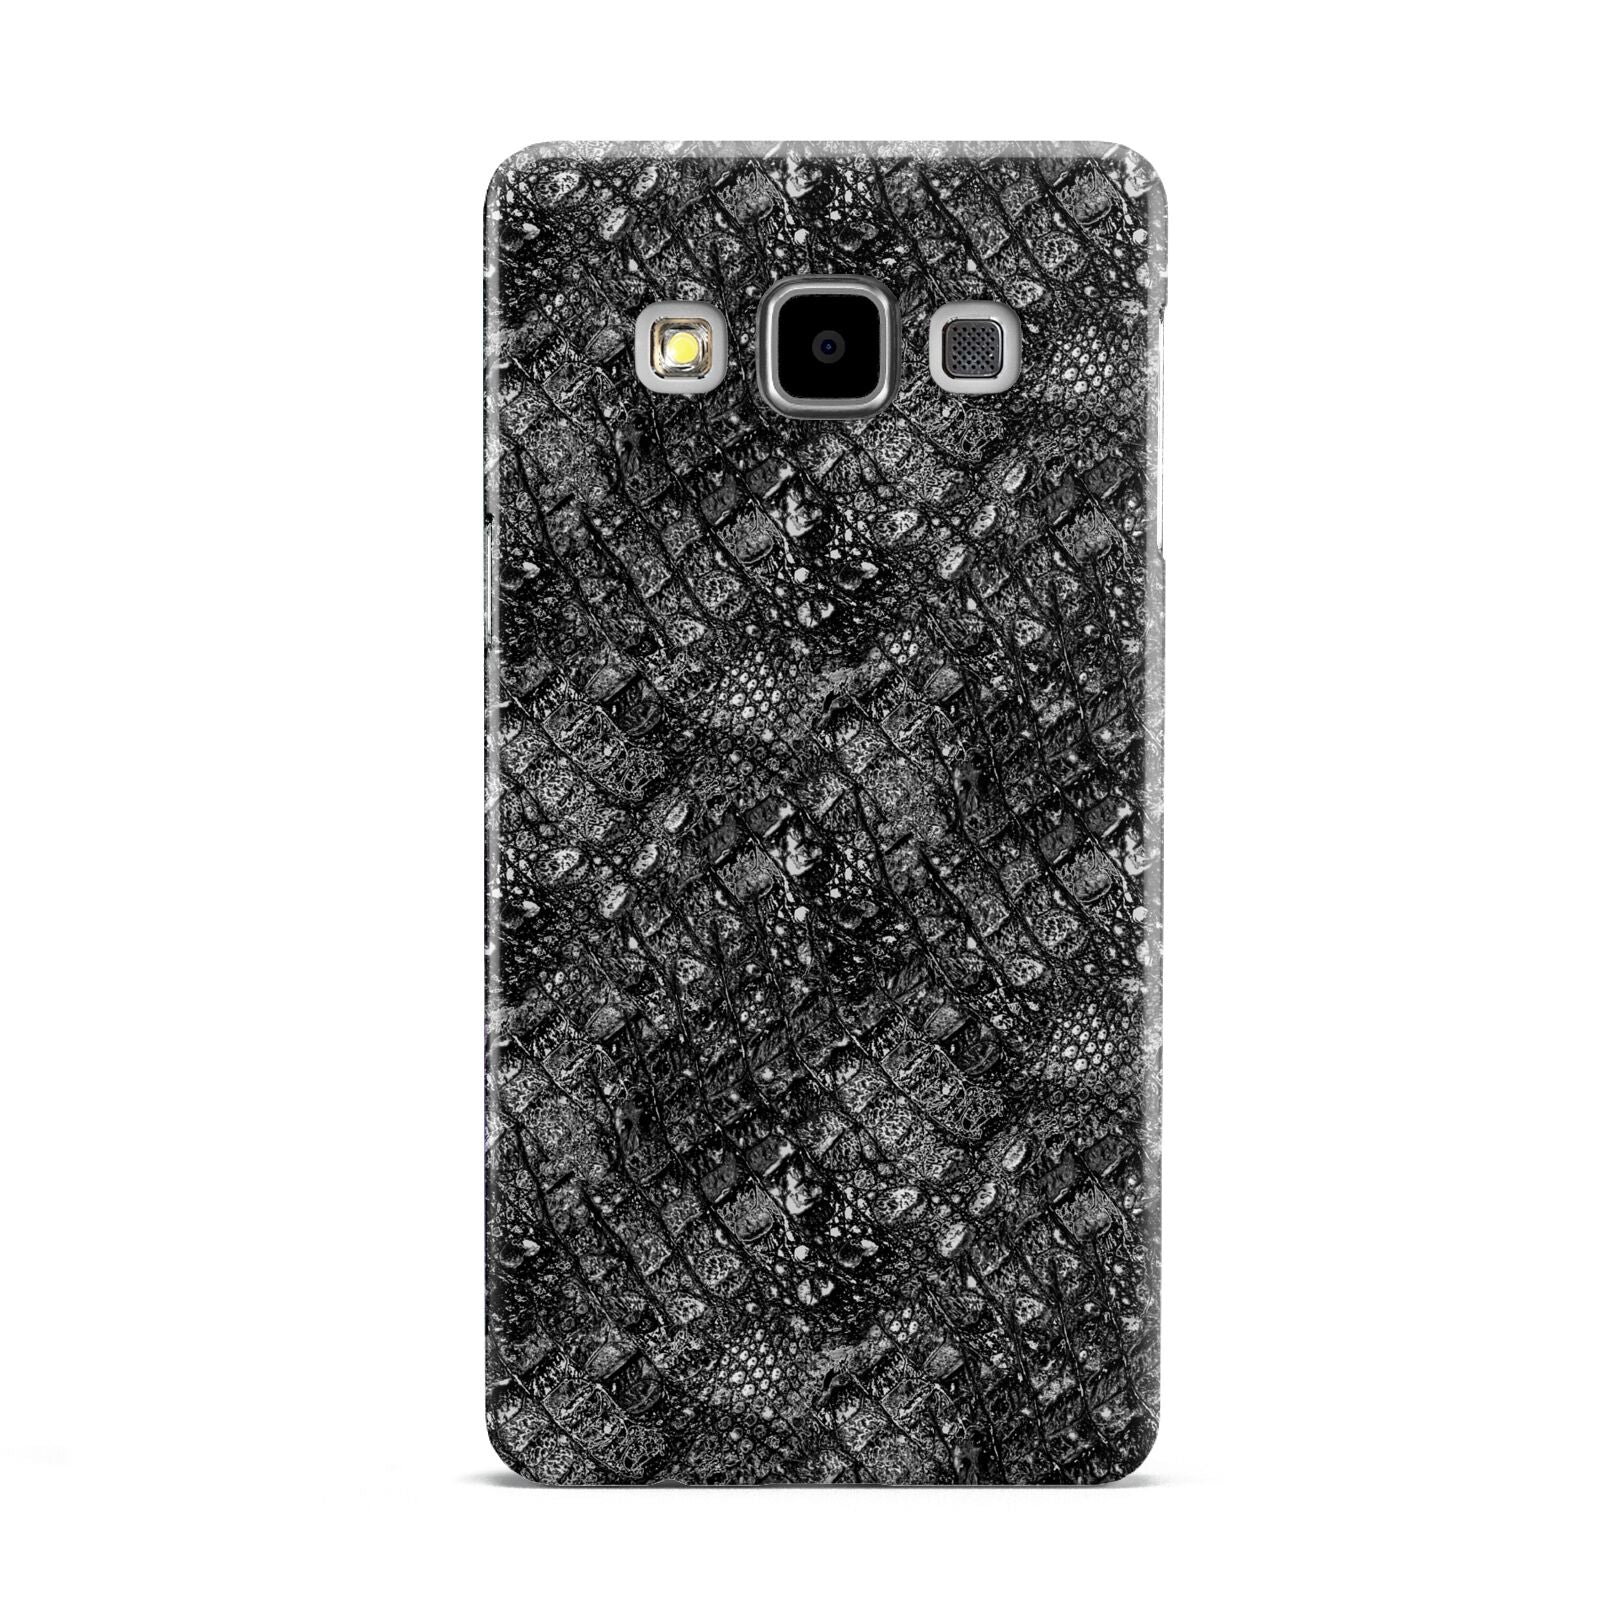 Snakeskin Design Samsung Galaxy A5 Case